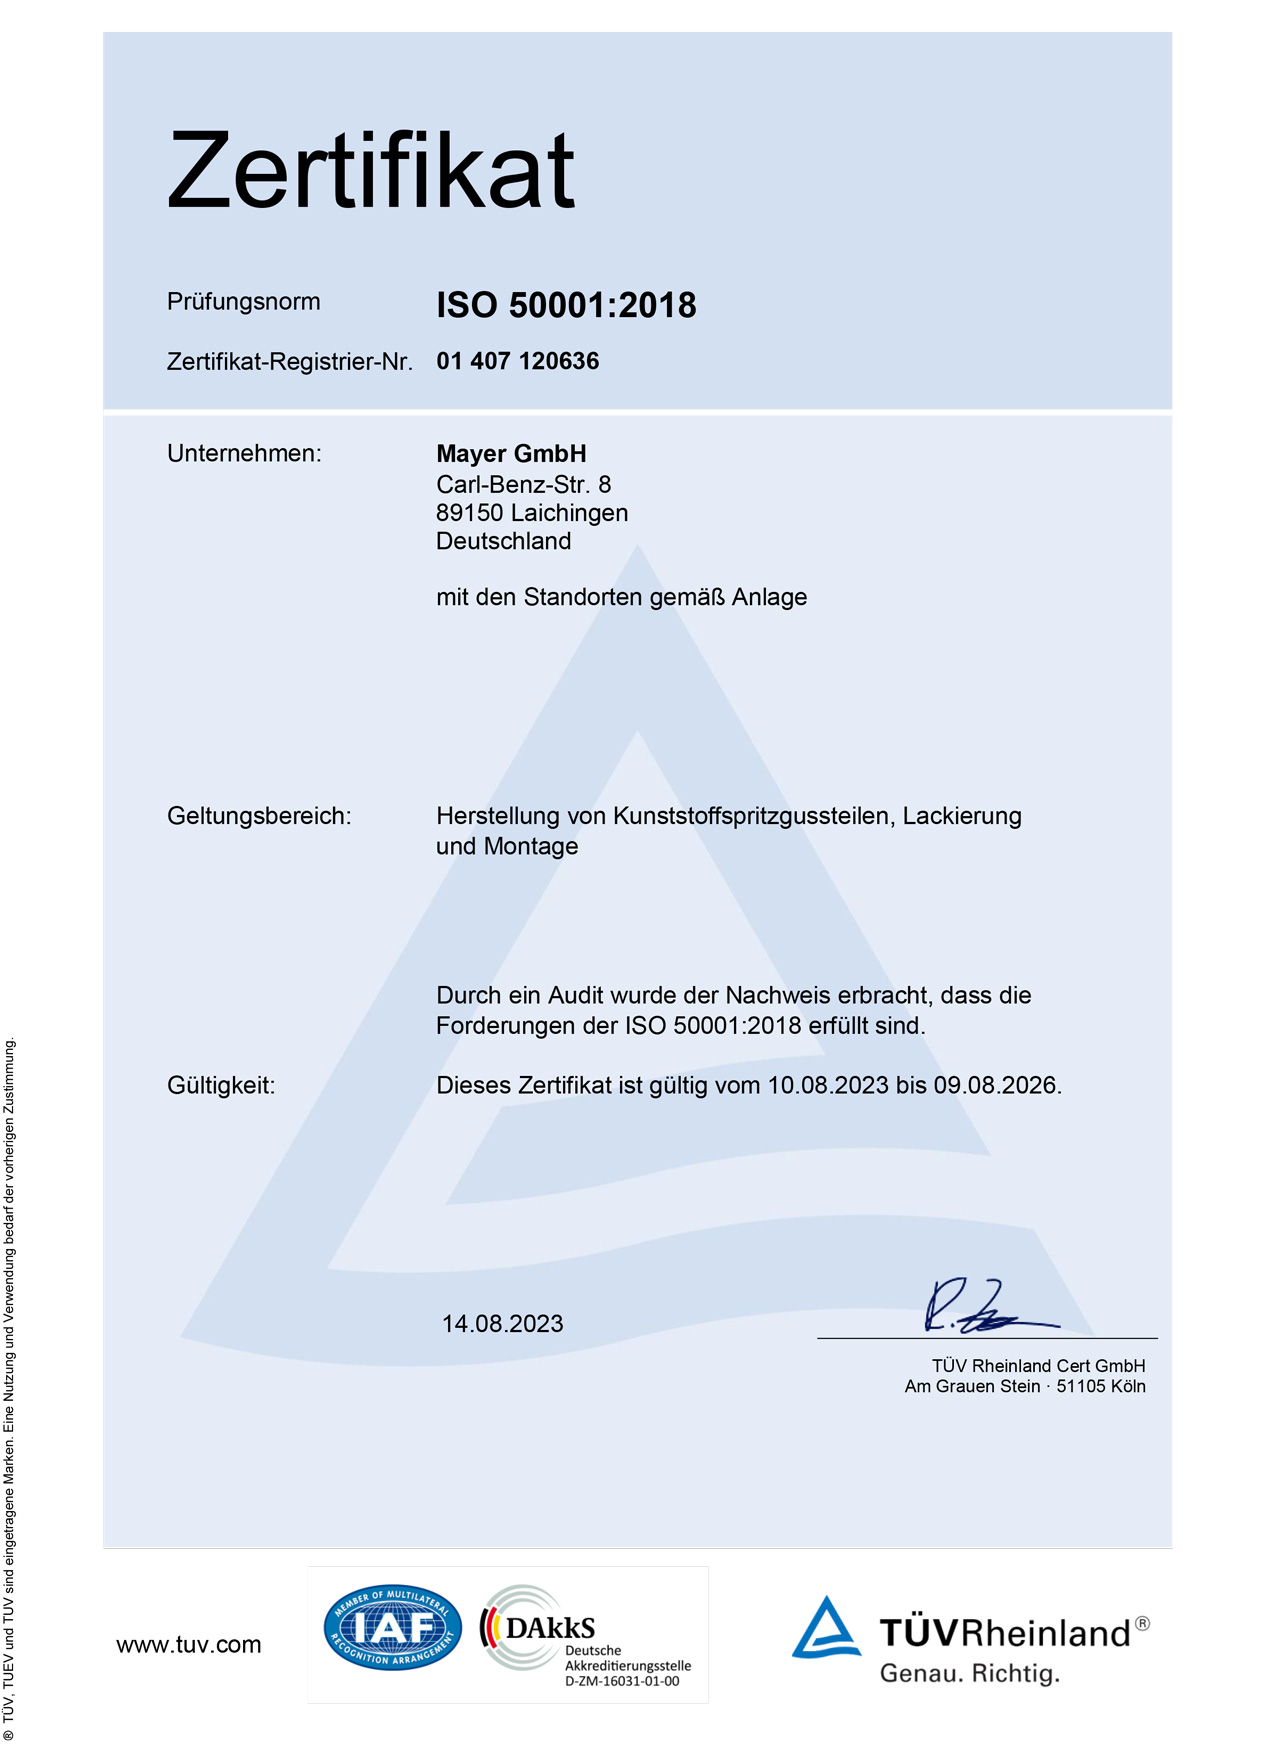 Mayer GmbH – Zertifikat ISO 50001:2018